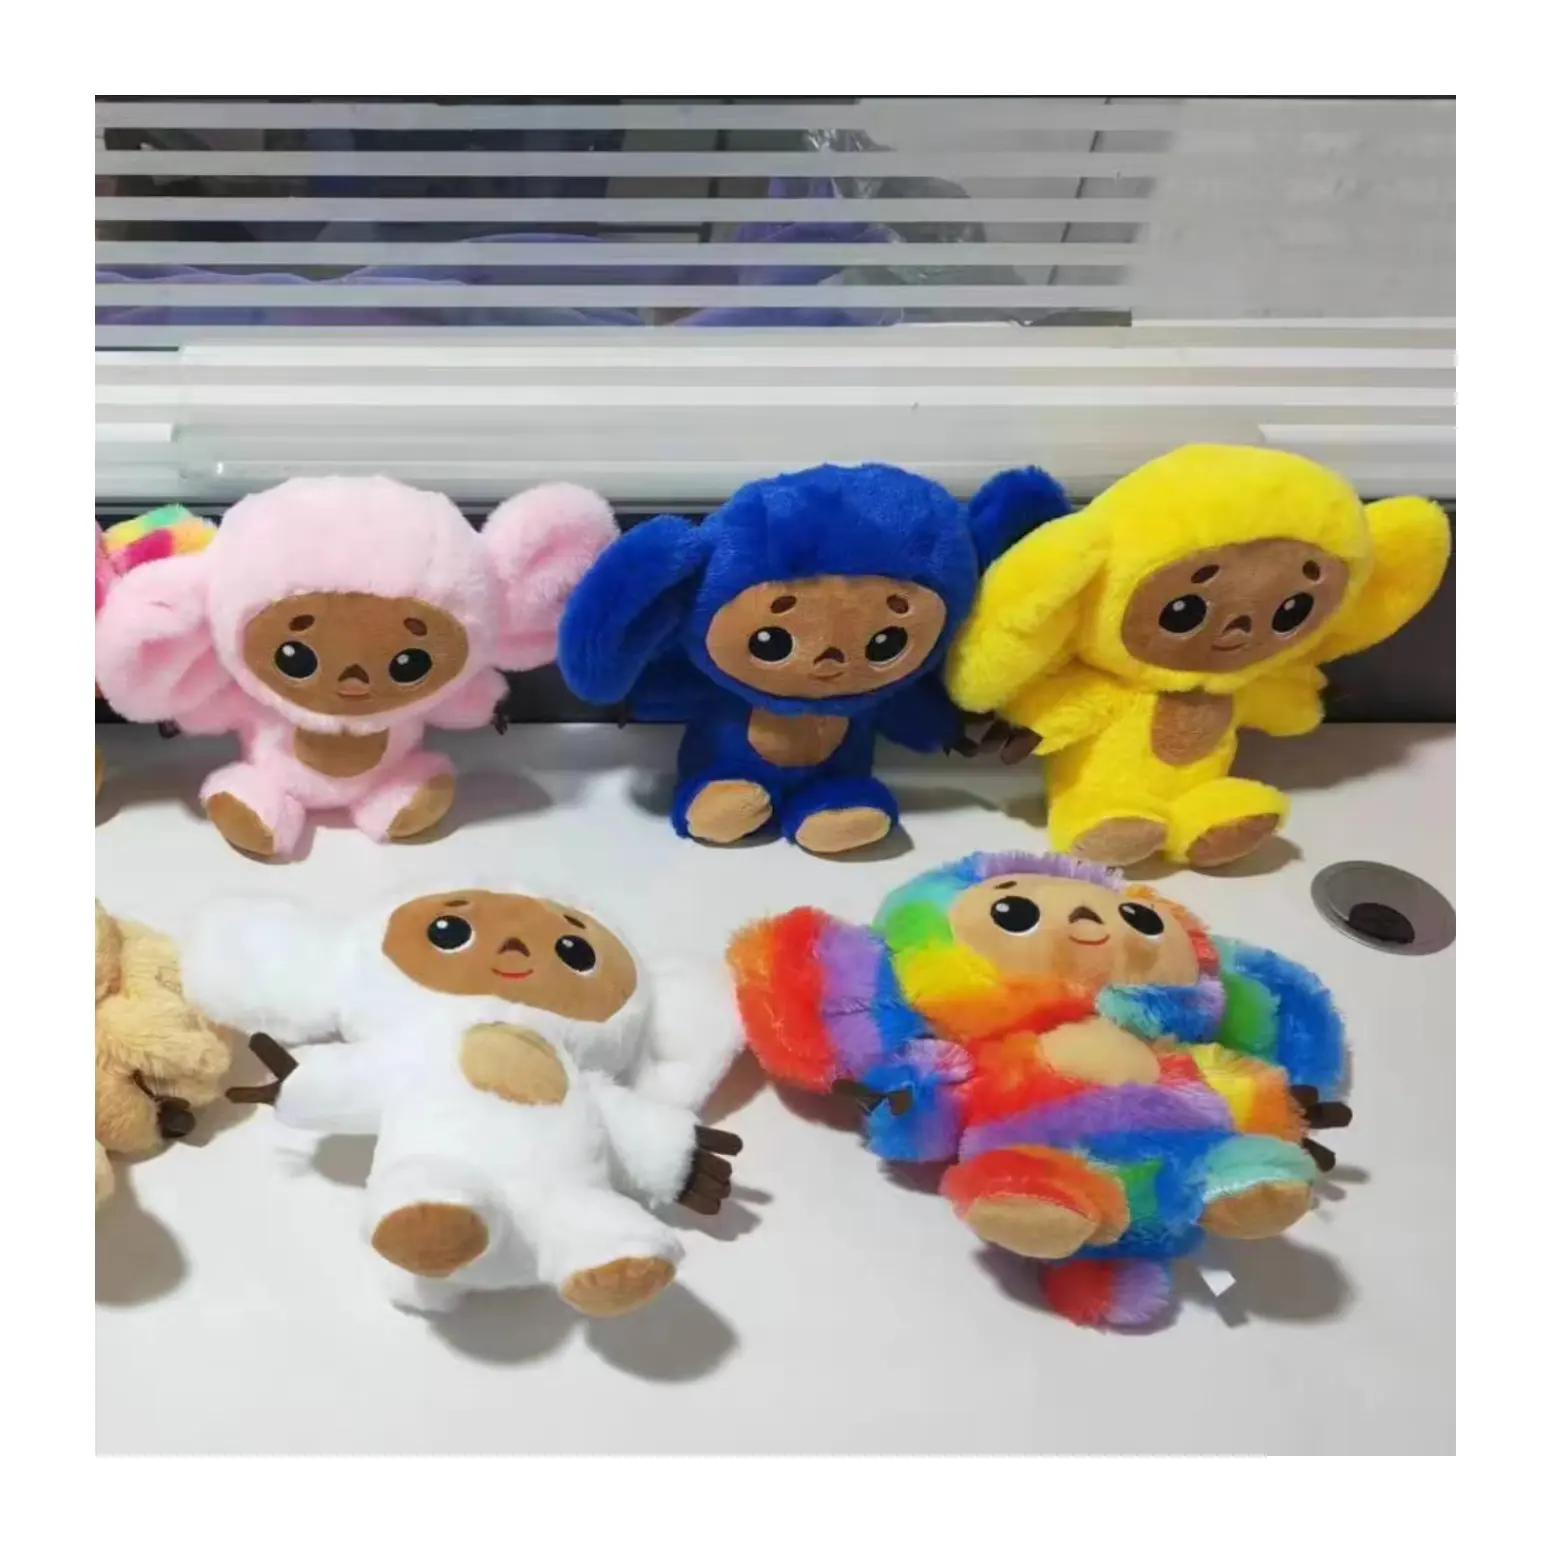 Allogogo Cpc Multicolor Plush Figure Toys Baby Big Ear Monkey Doll Russia Anime Cheburashka Soft Plush Toy For Kids